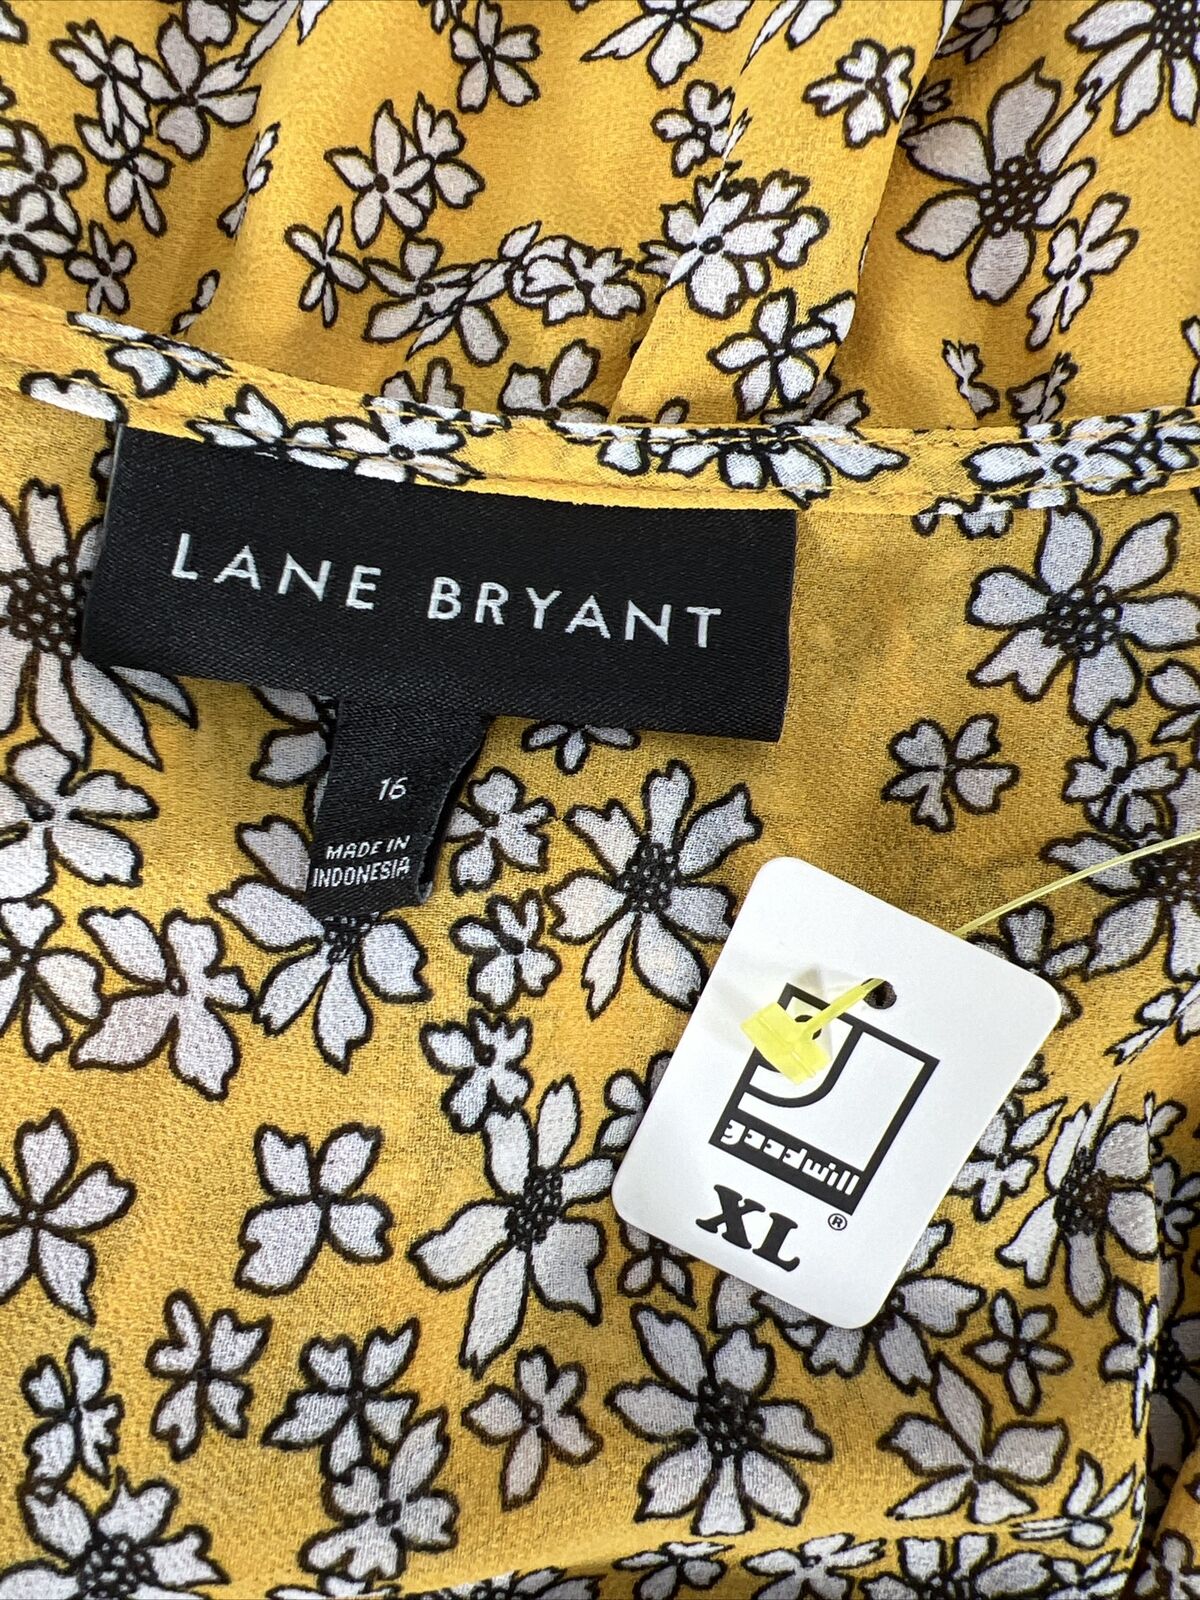 NEW Lane Bryant Women's Yellow Floral Sheer Sleeve Blouse - 16 Plus